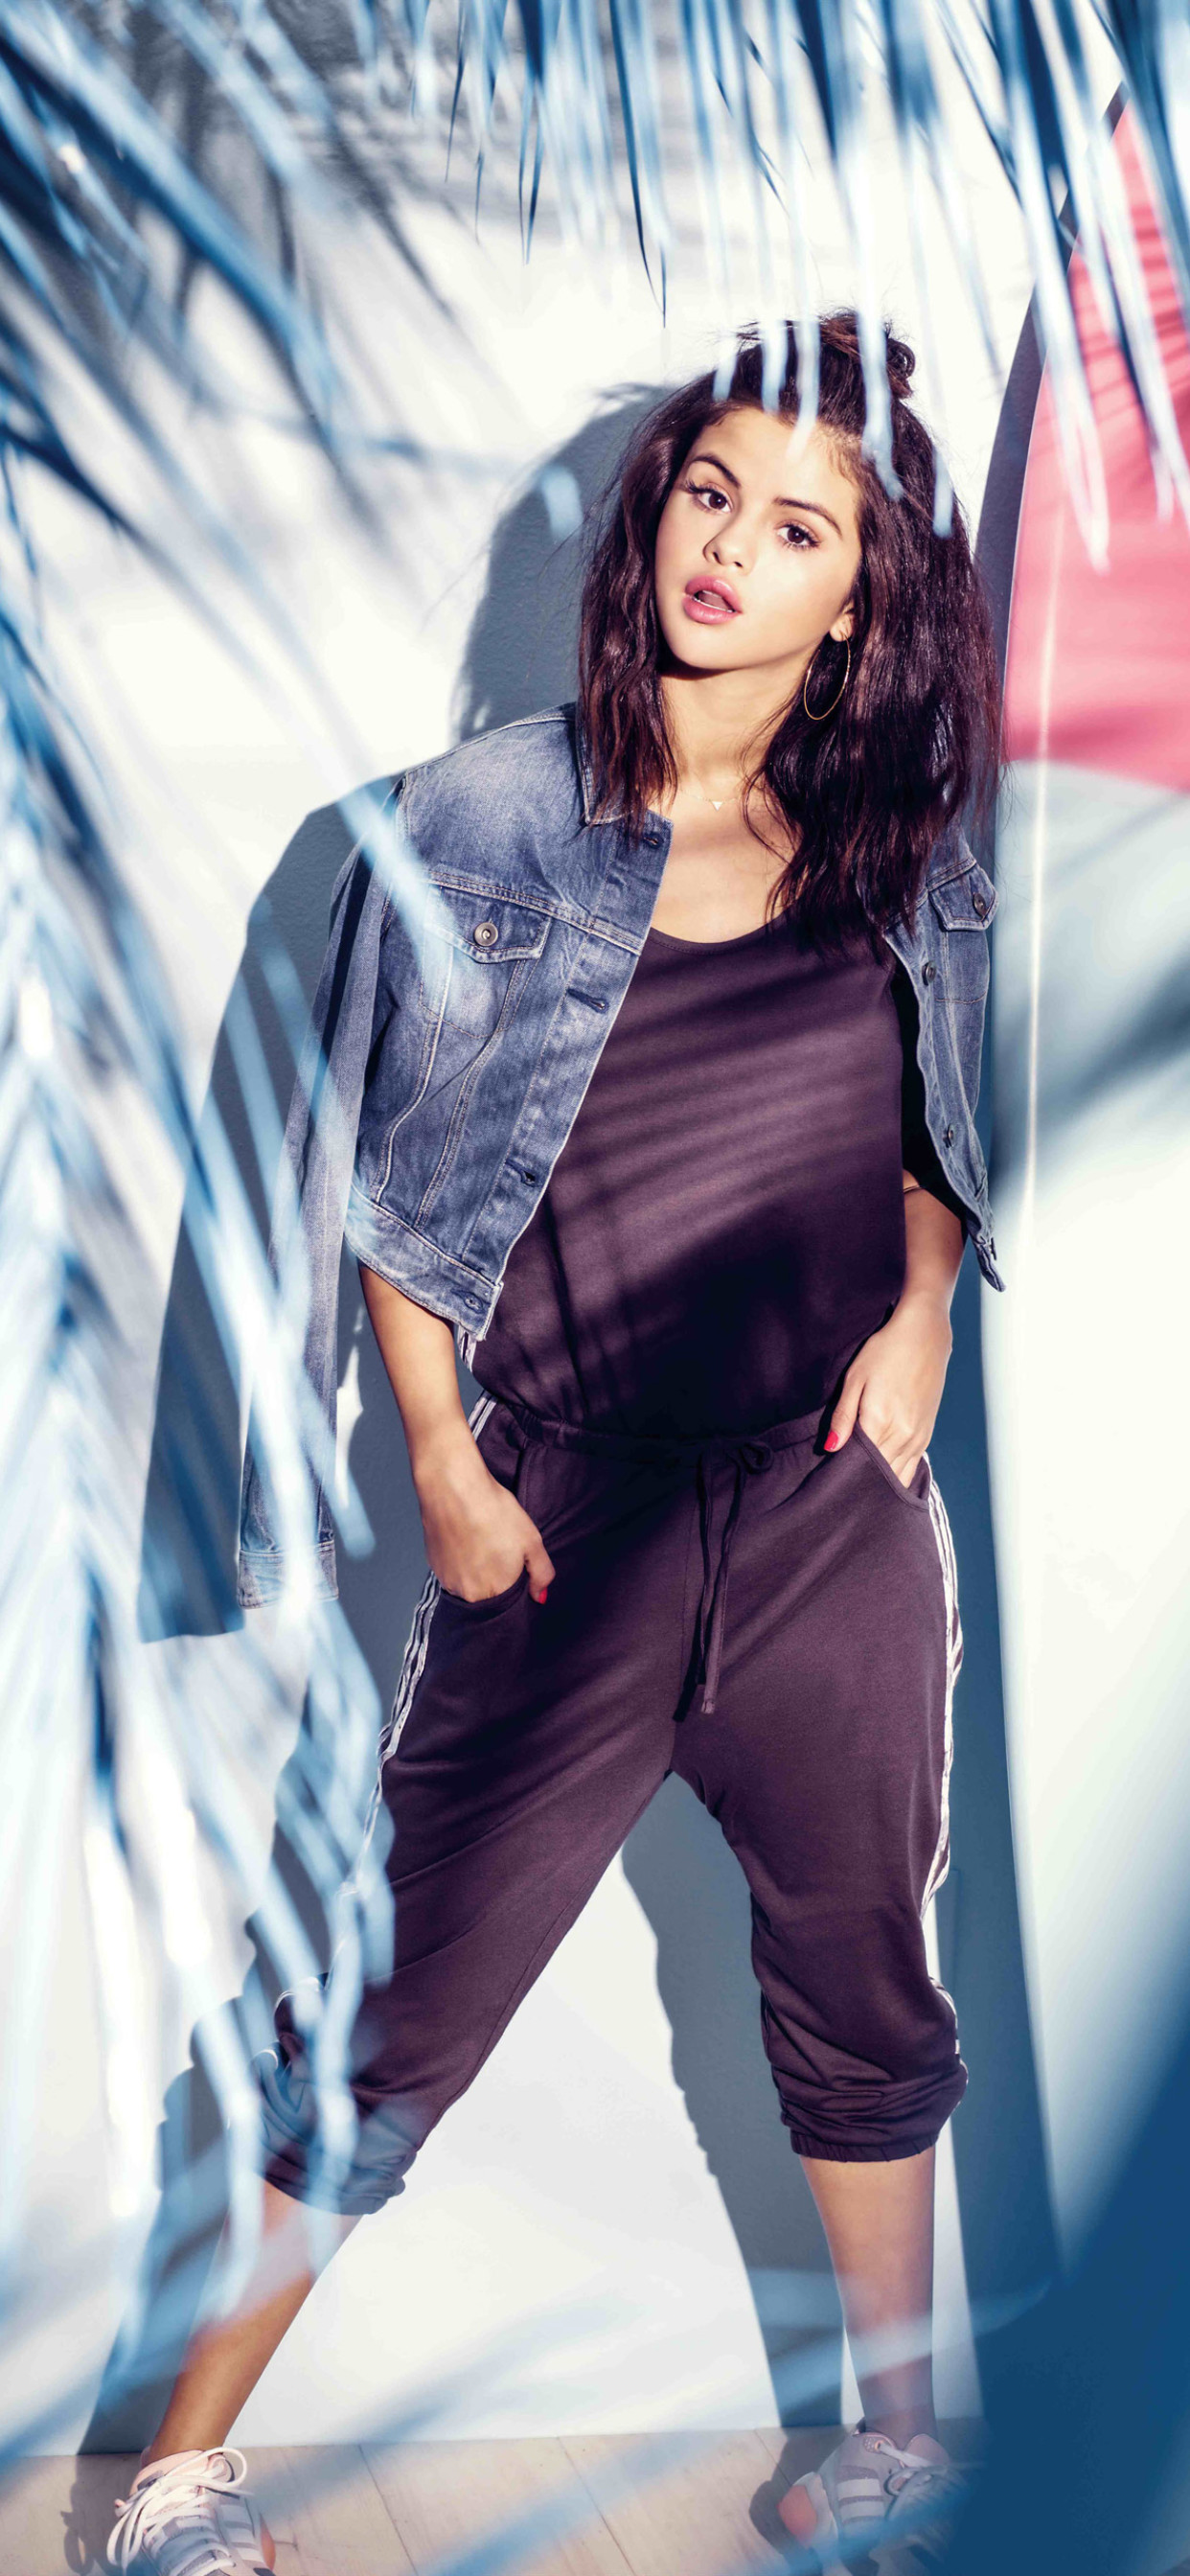 Cute Photos Of Selena Gomez - HD Wallpaper 